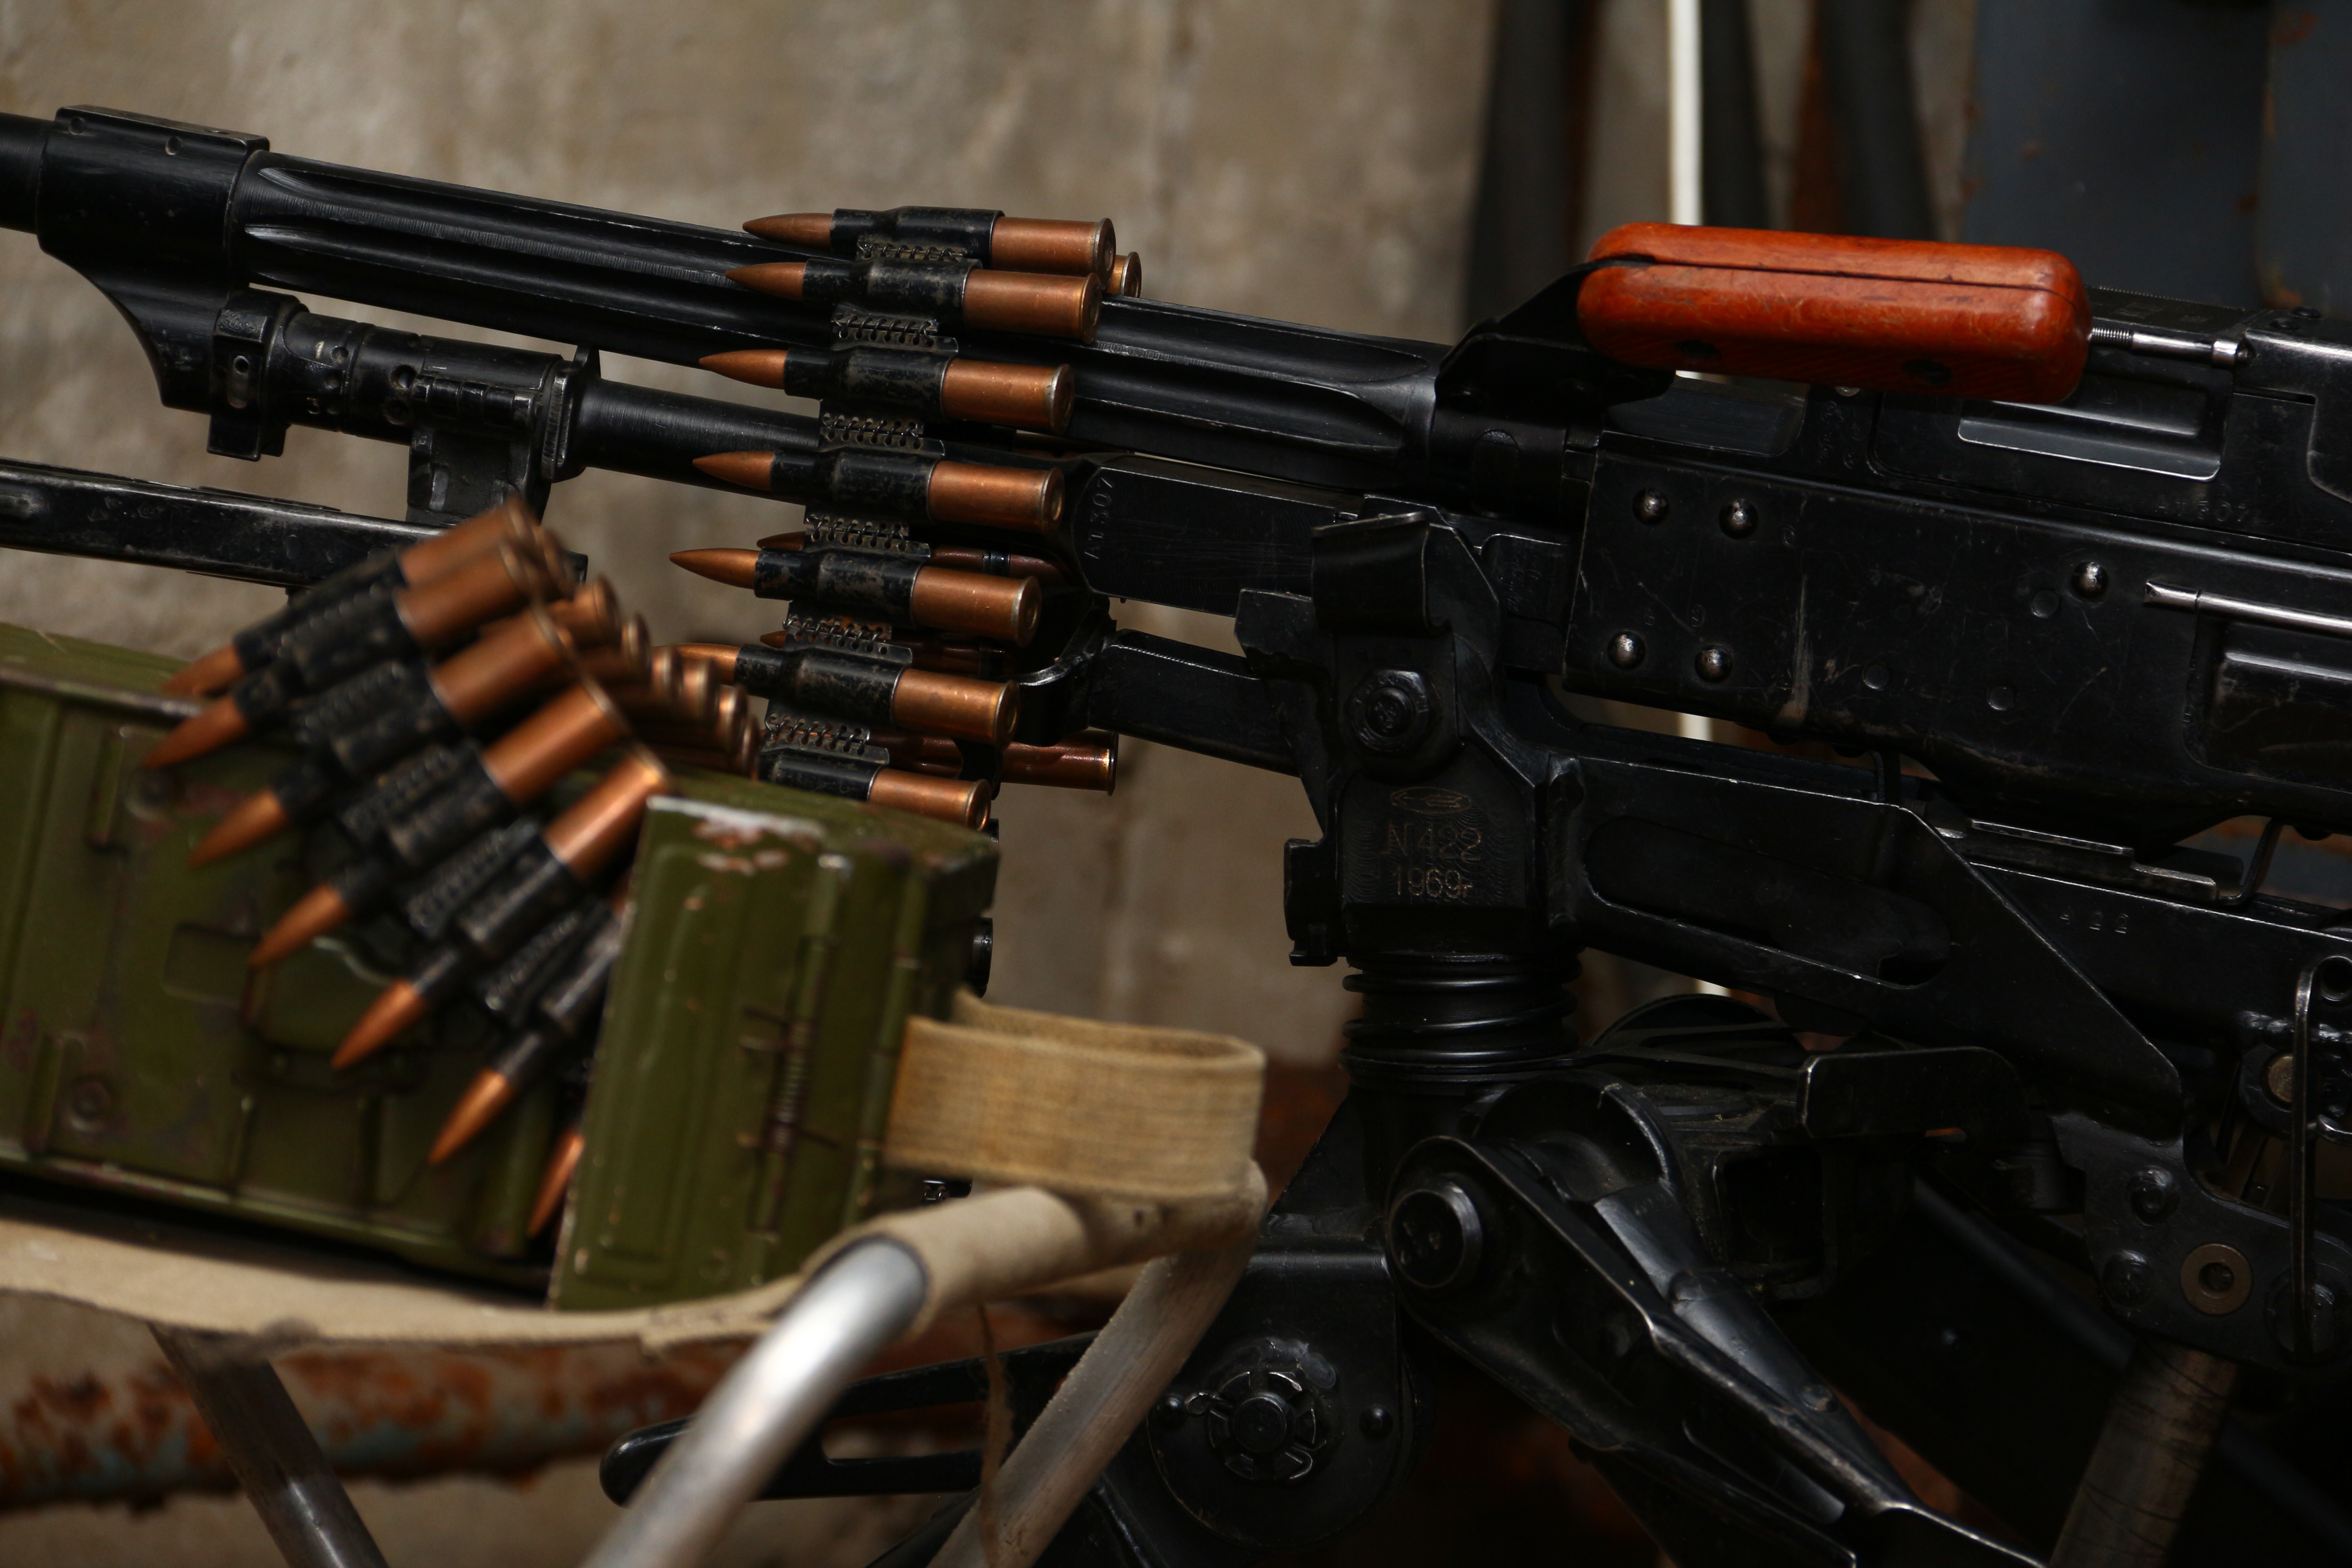 General 5184x3456 PK machine gun machine gun weapon ammobelt osob.store